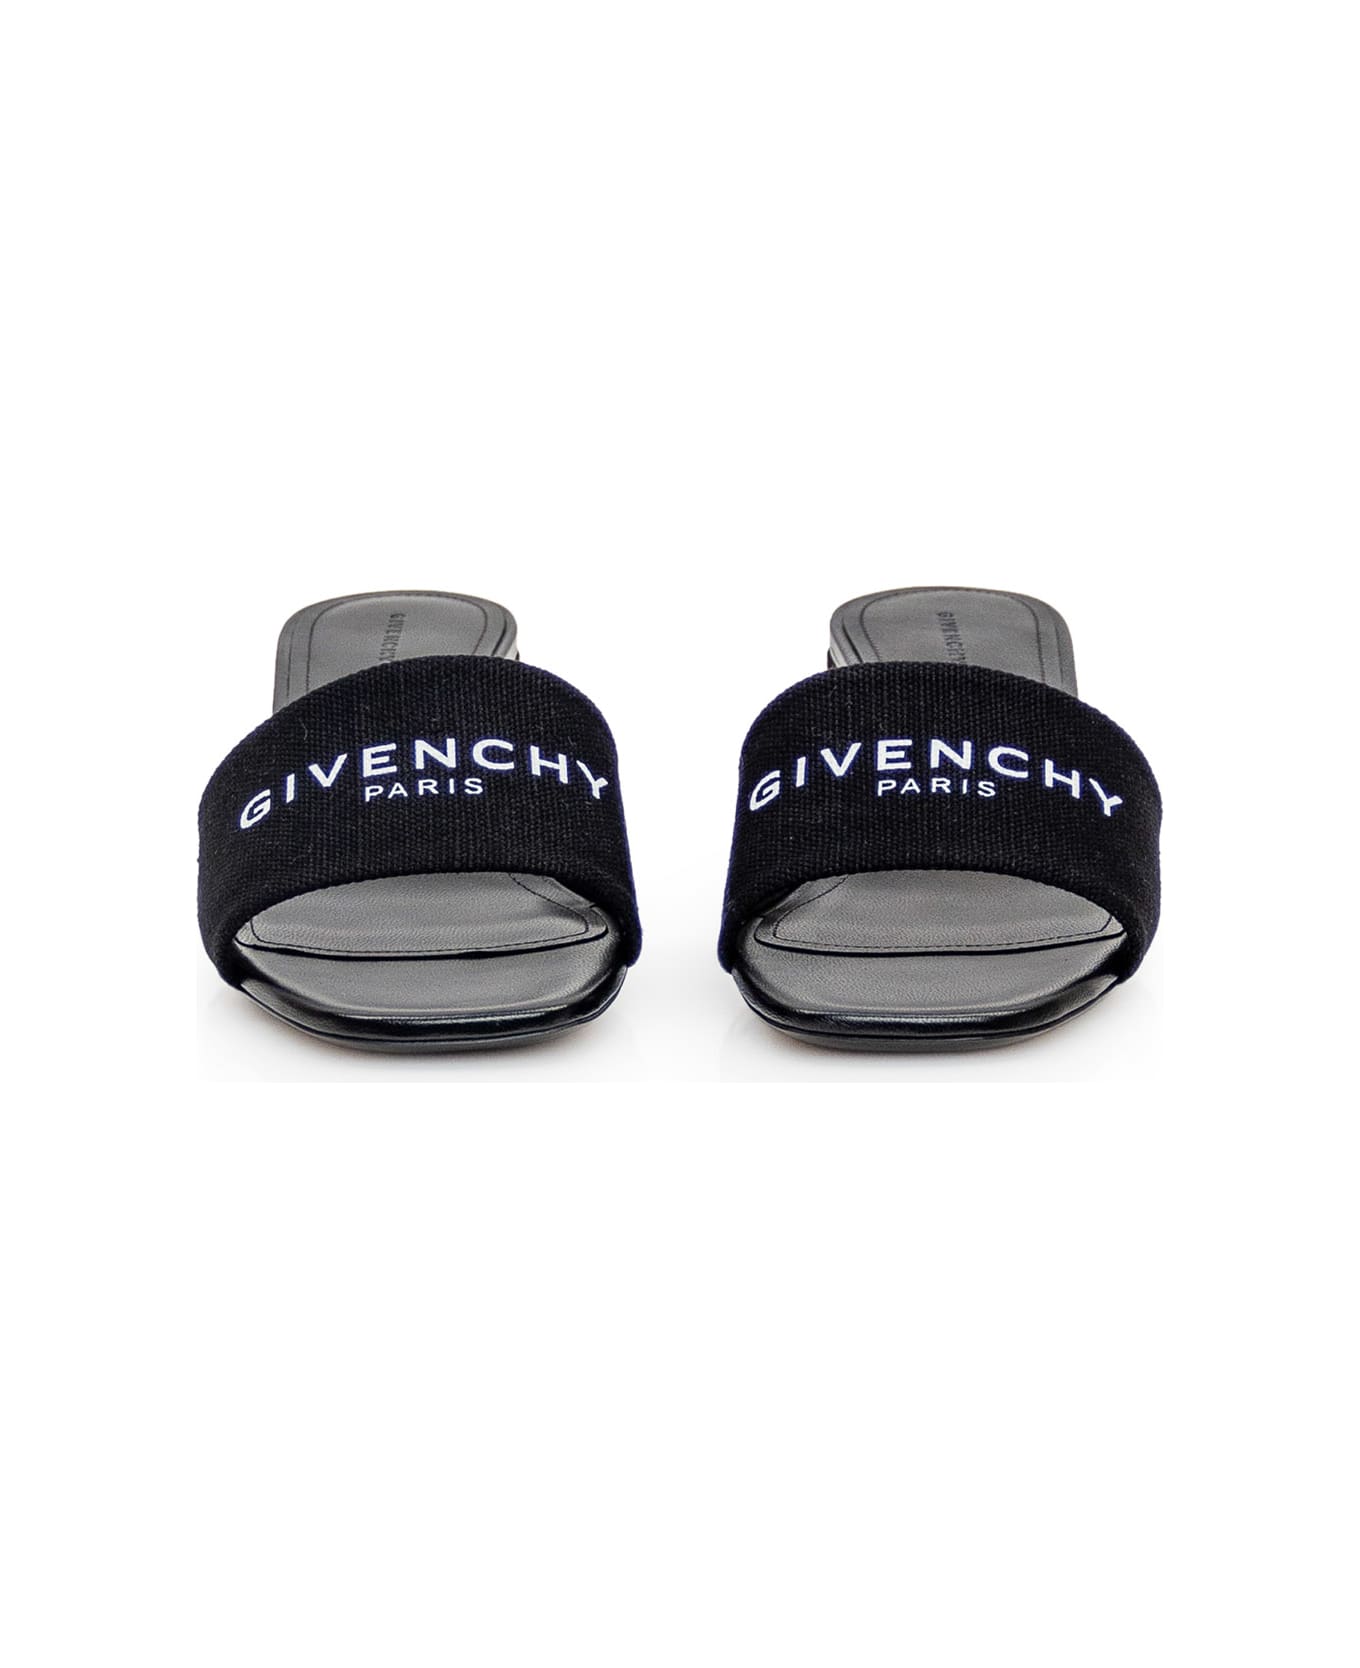 Givenchy 4g Sandals - black